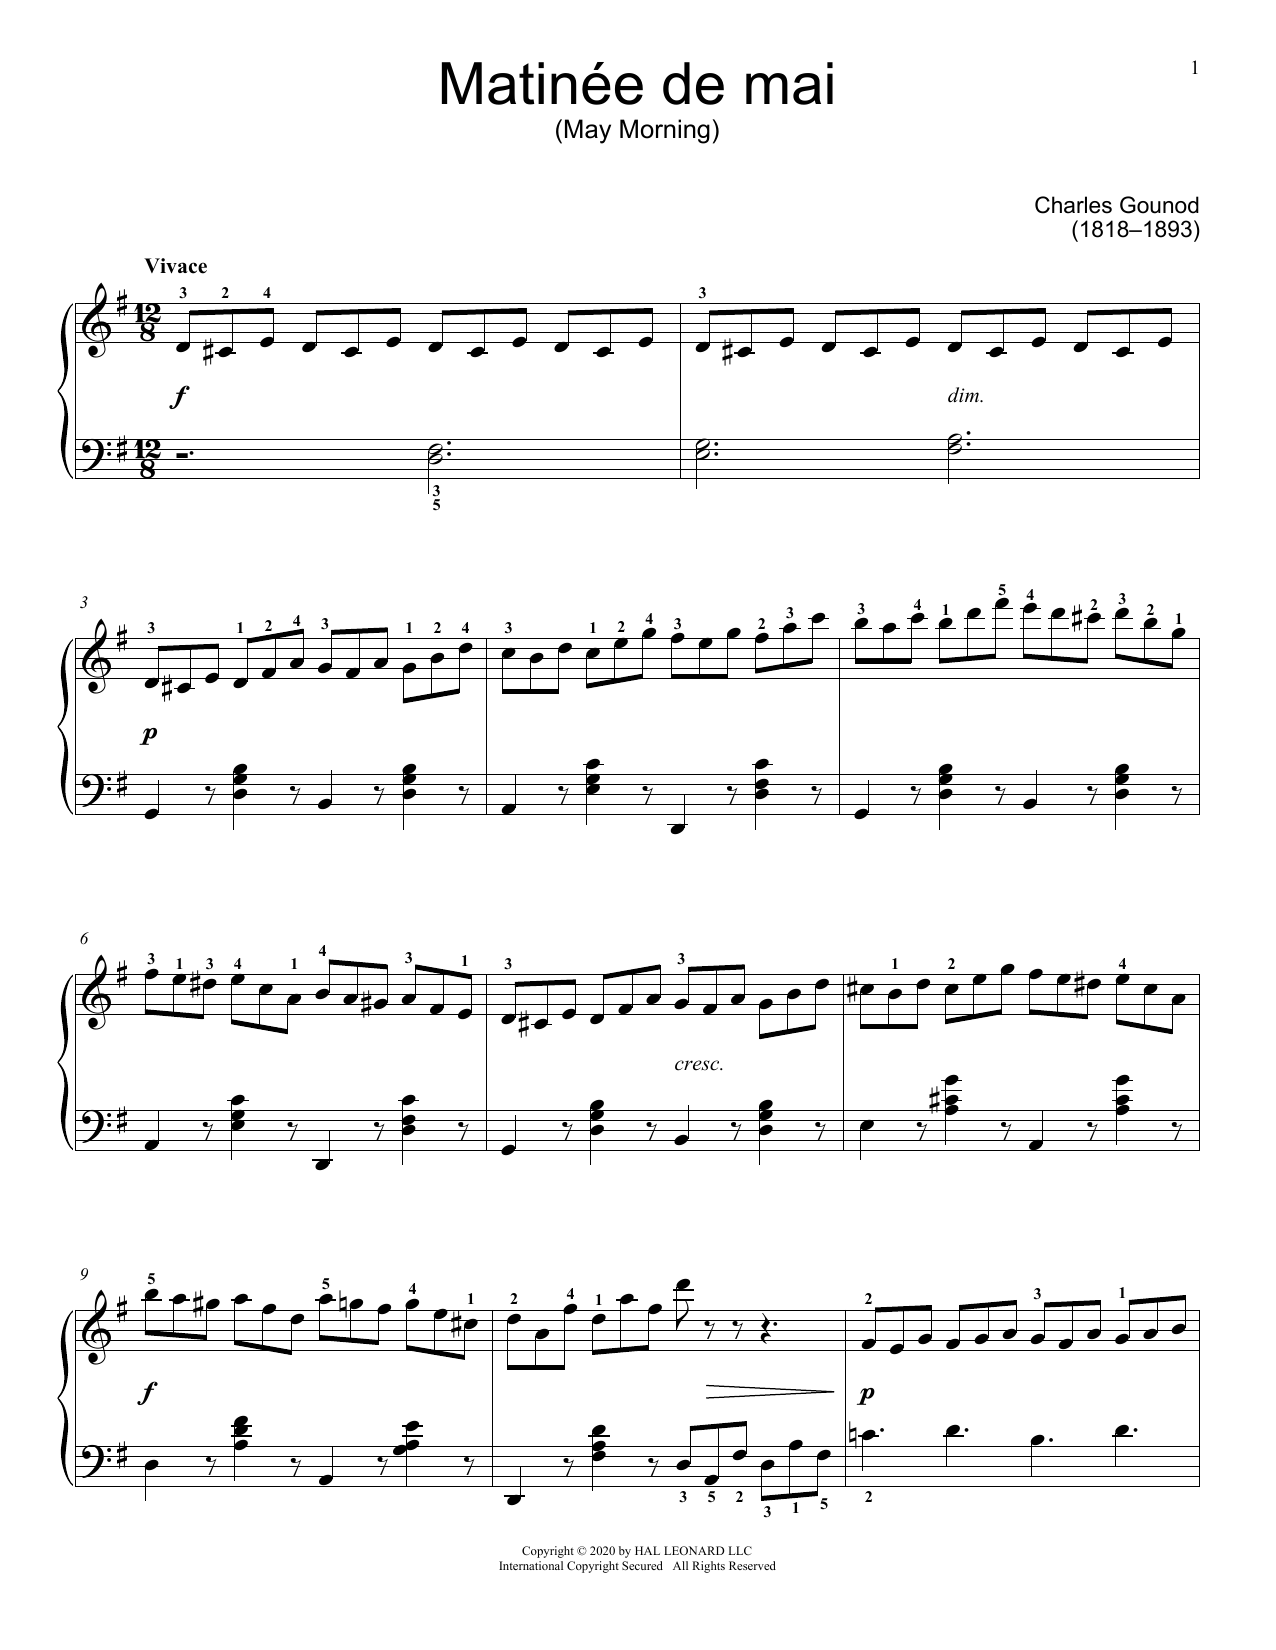 Download Charles Gounod Matinee de mai Sheet Music